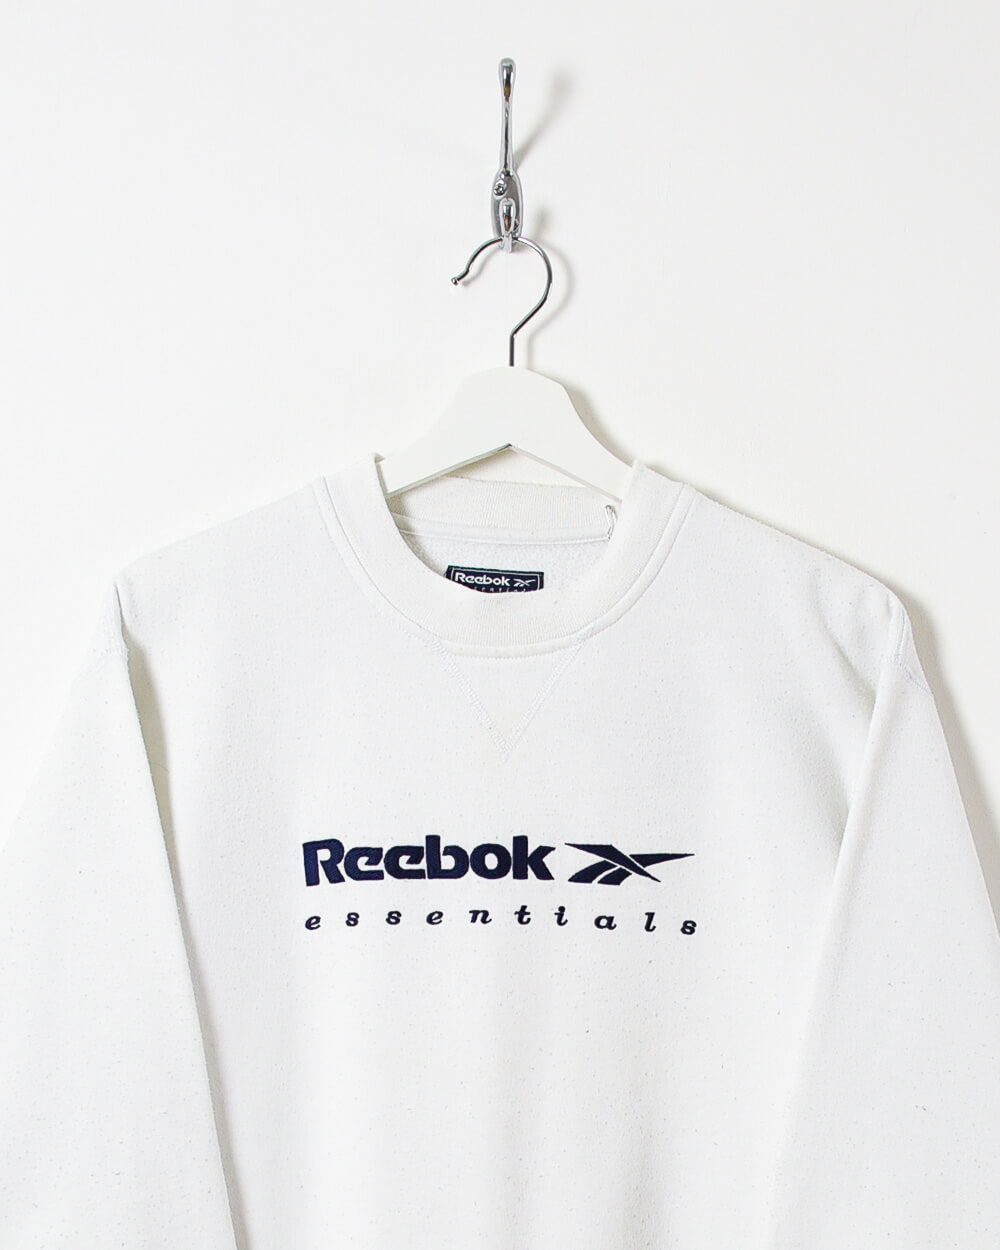 Reebok Essentials Women's Sweatshirt - Small - Domno Vintage 90s, 80s, 00s Retro and Vintage Clothing 